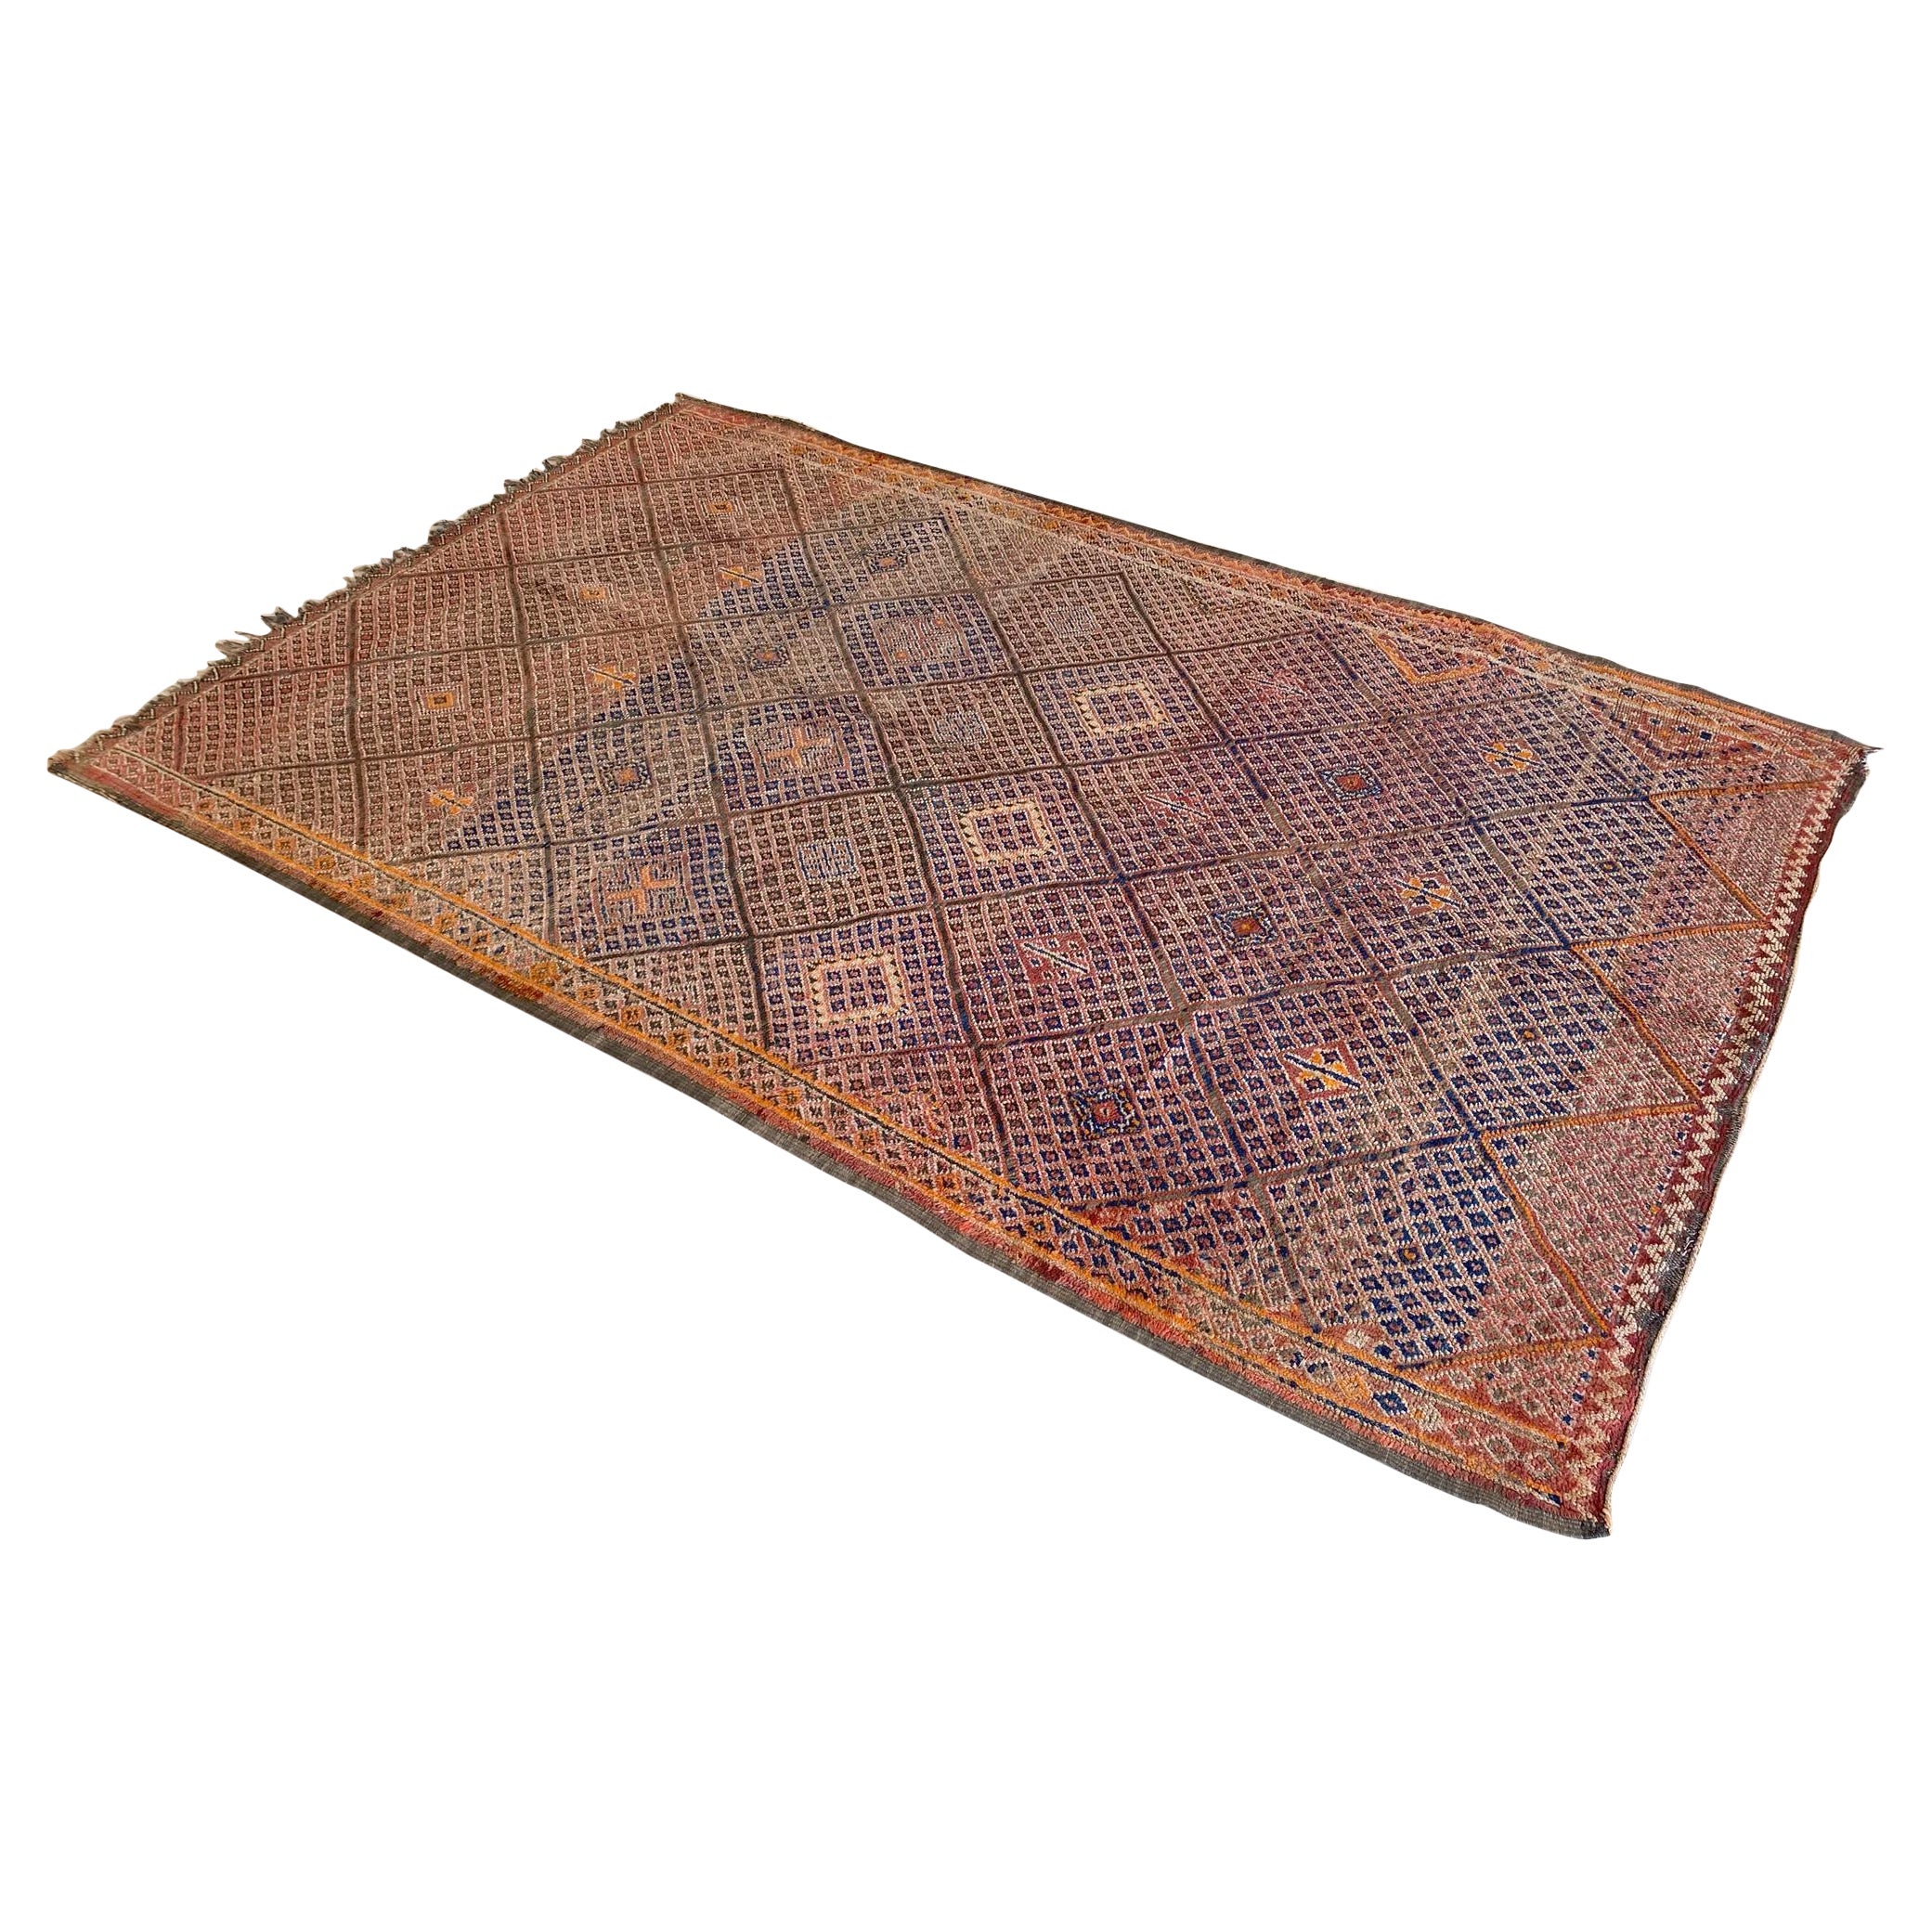 Vintage Beni Mguild rug - Orange/terracotta/blue - 6.1x9.8feet / 186x298cm